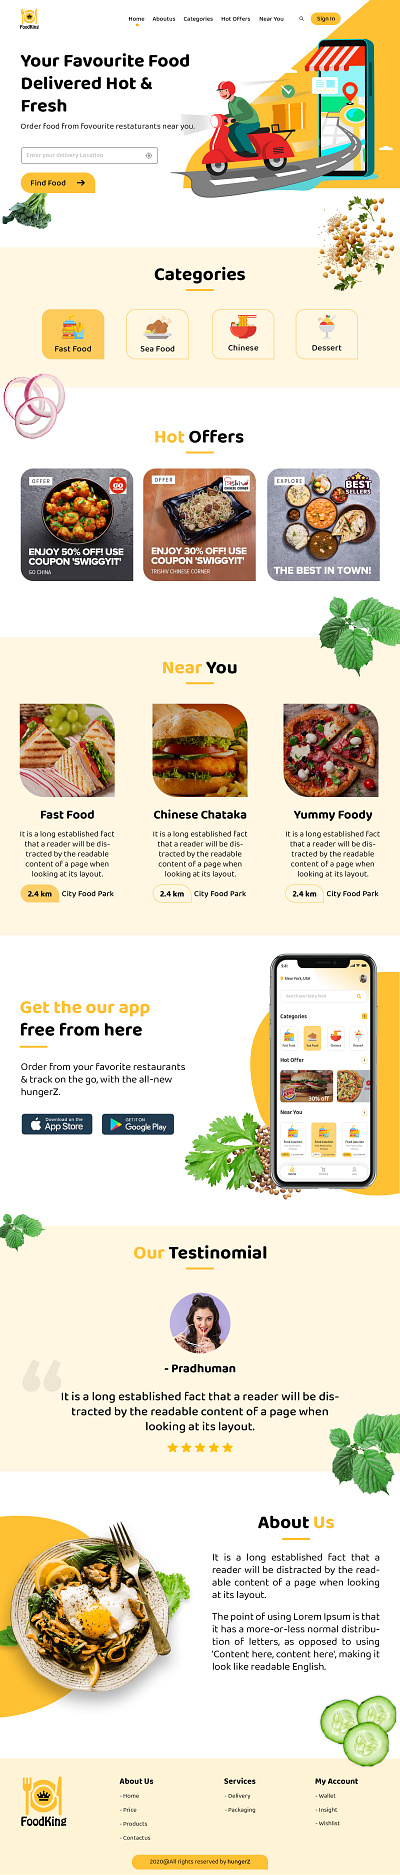 Foodking_Website